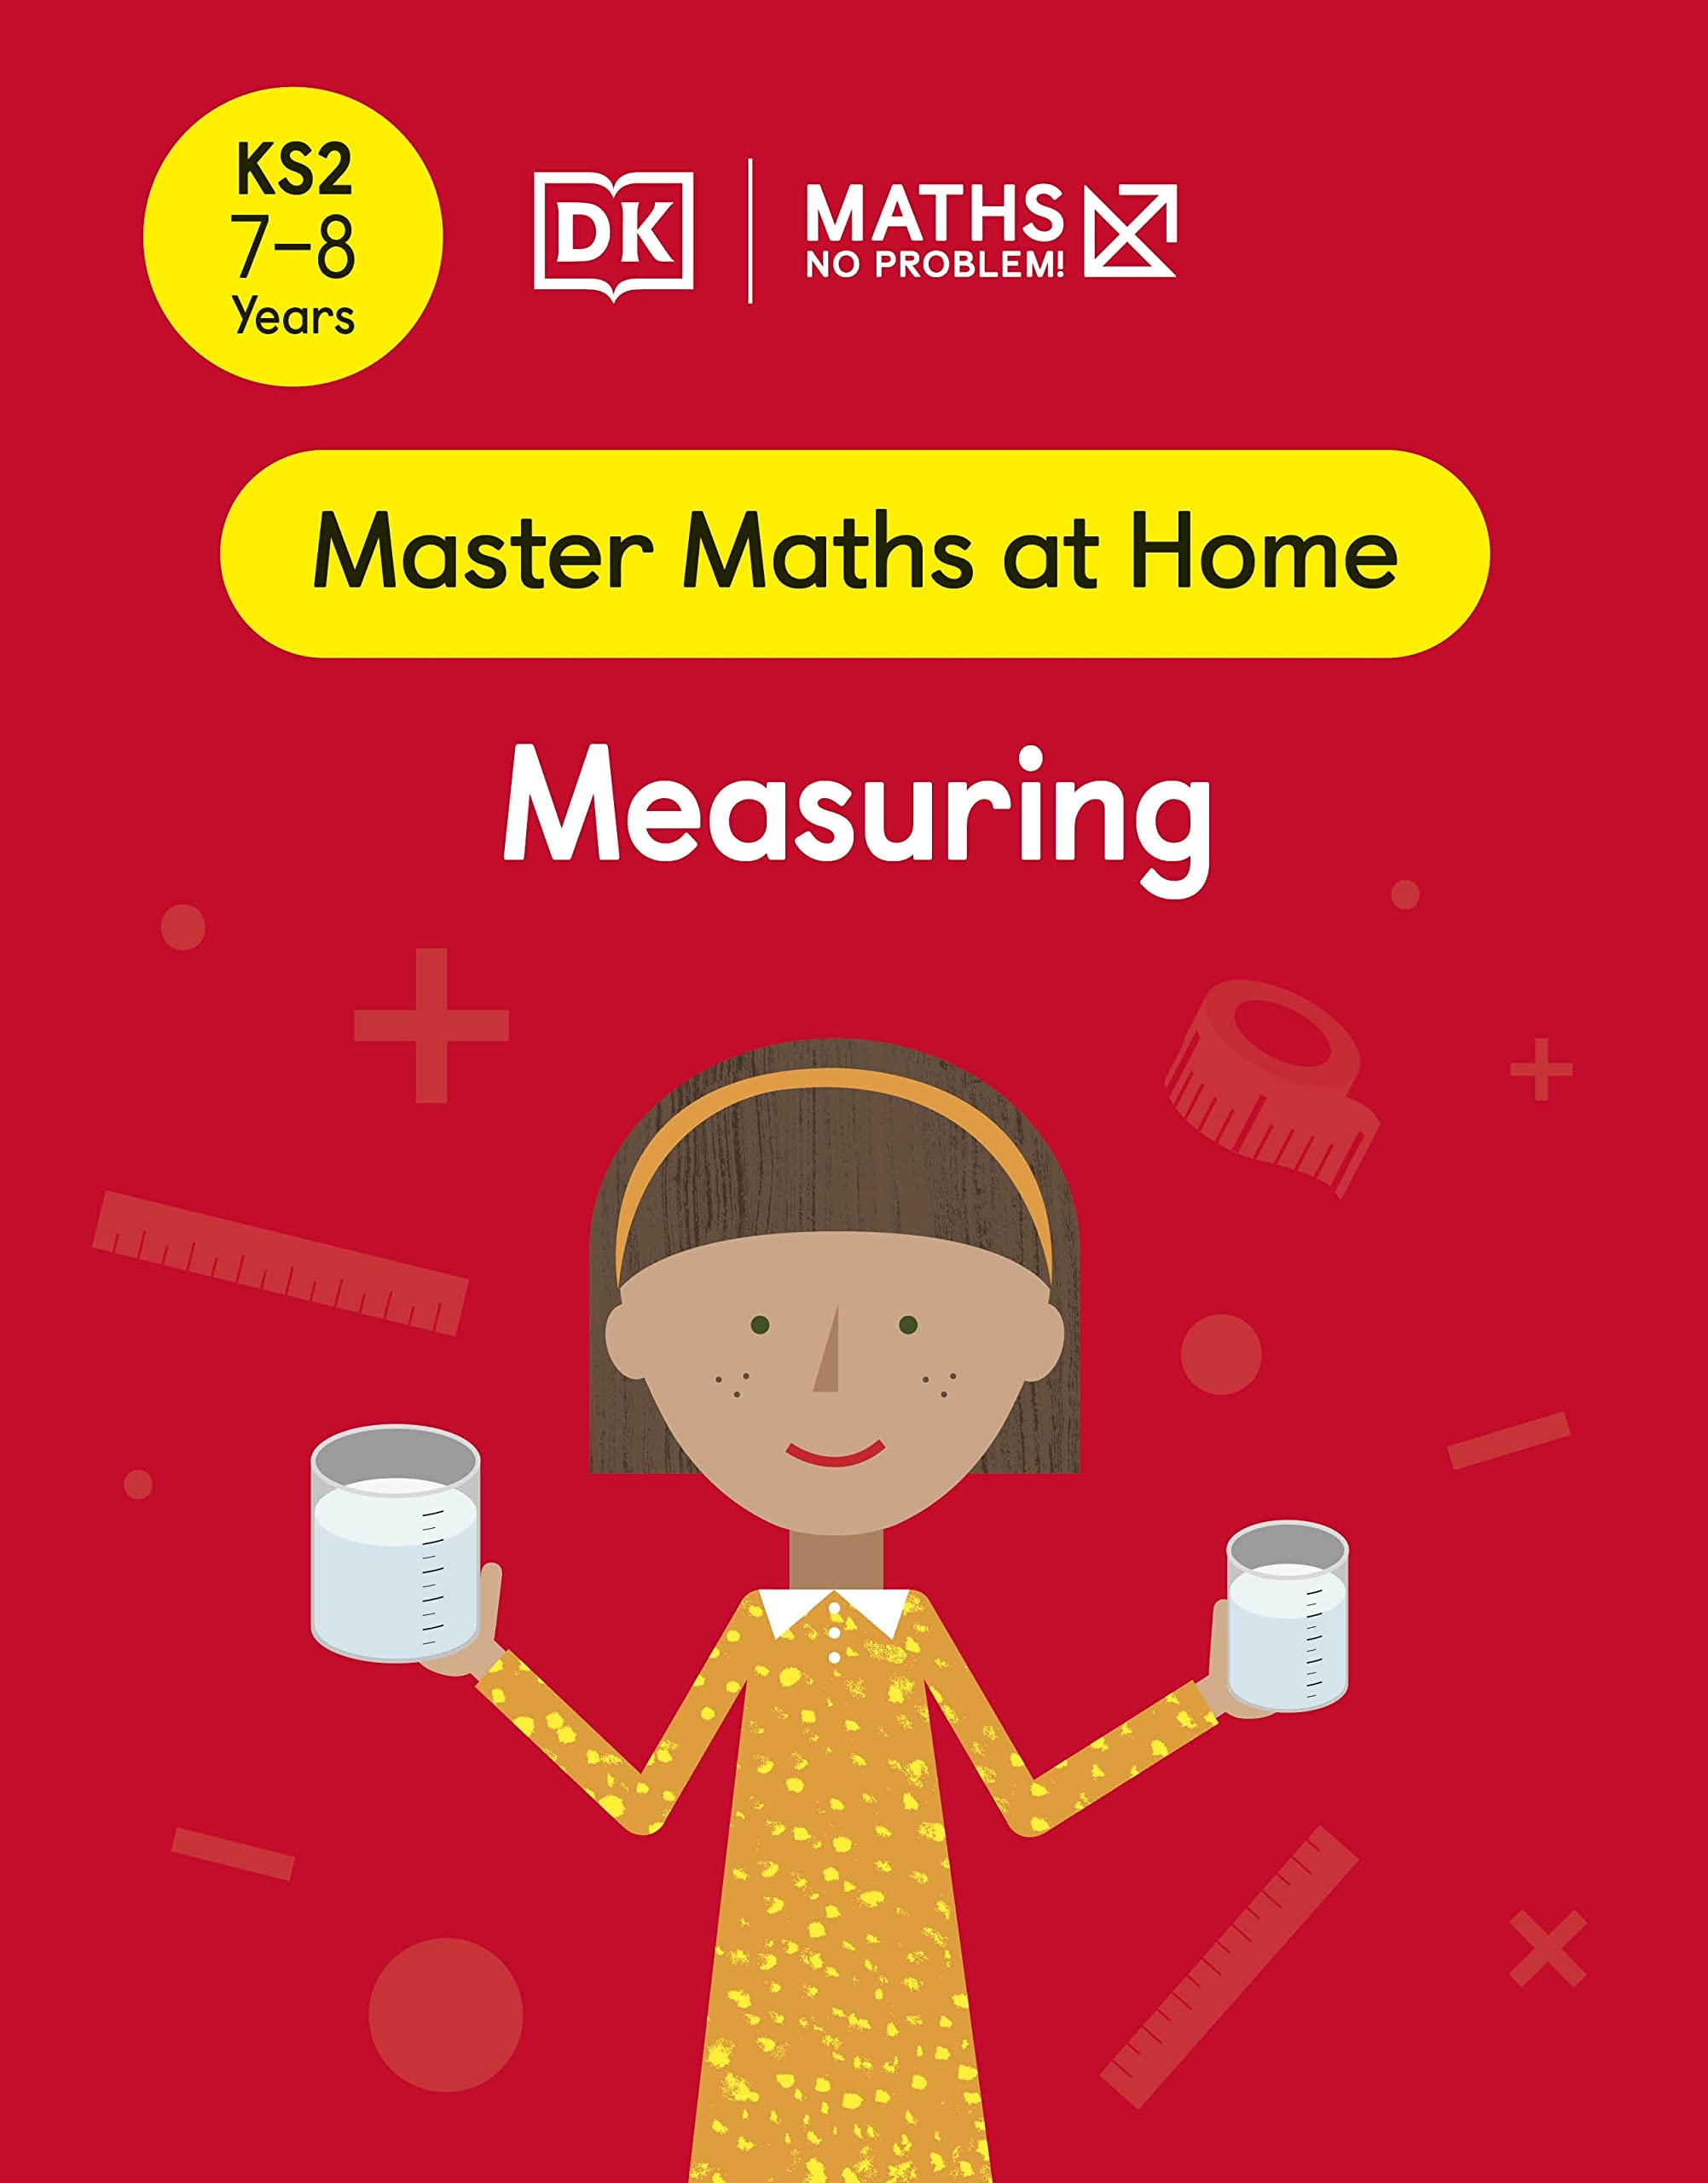 Maths - No Problem! Measuring